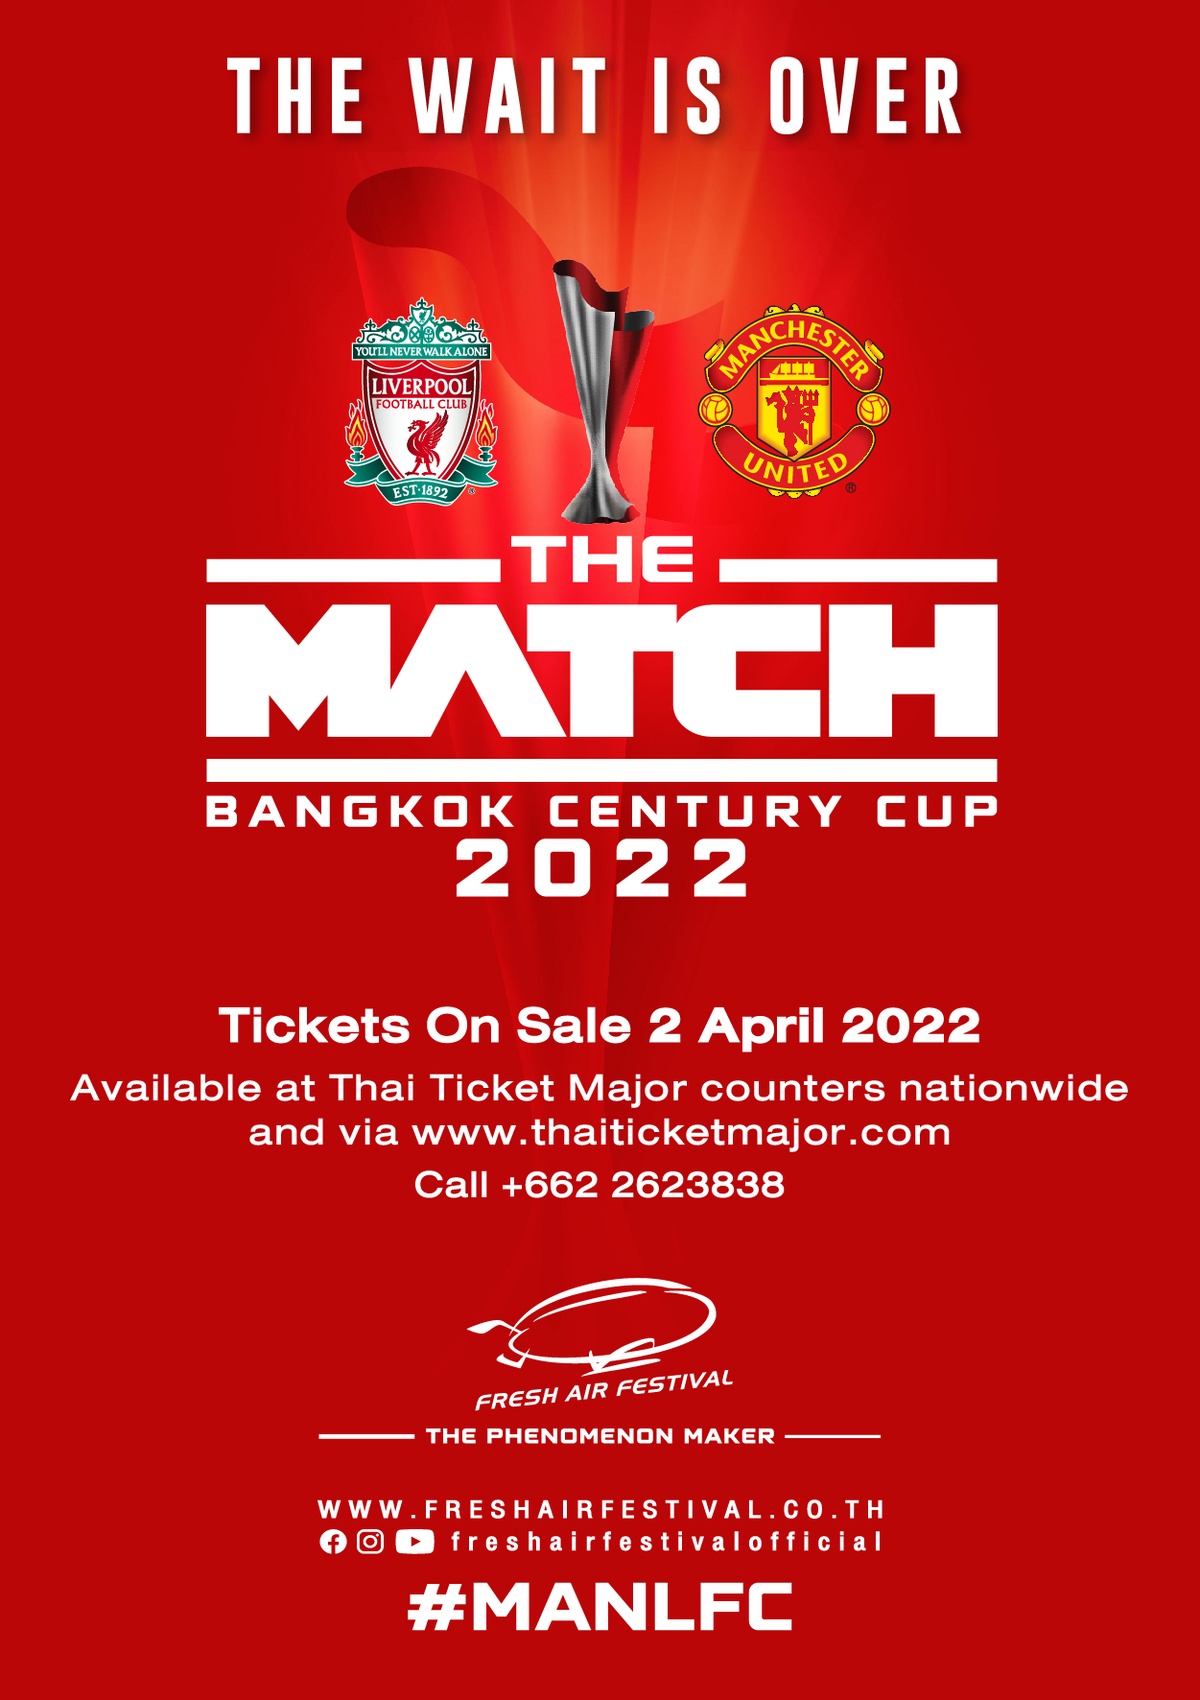 THE MATCH BANGKOK CENTURY CUP 2022 announces public ticket sales date 2 April 2022 at 10:00AM Bangkok local